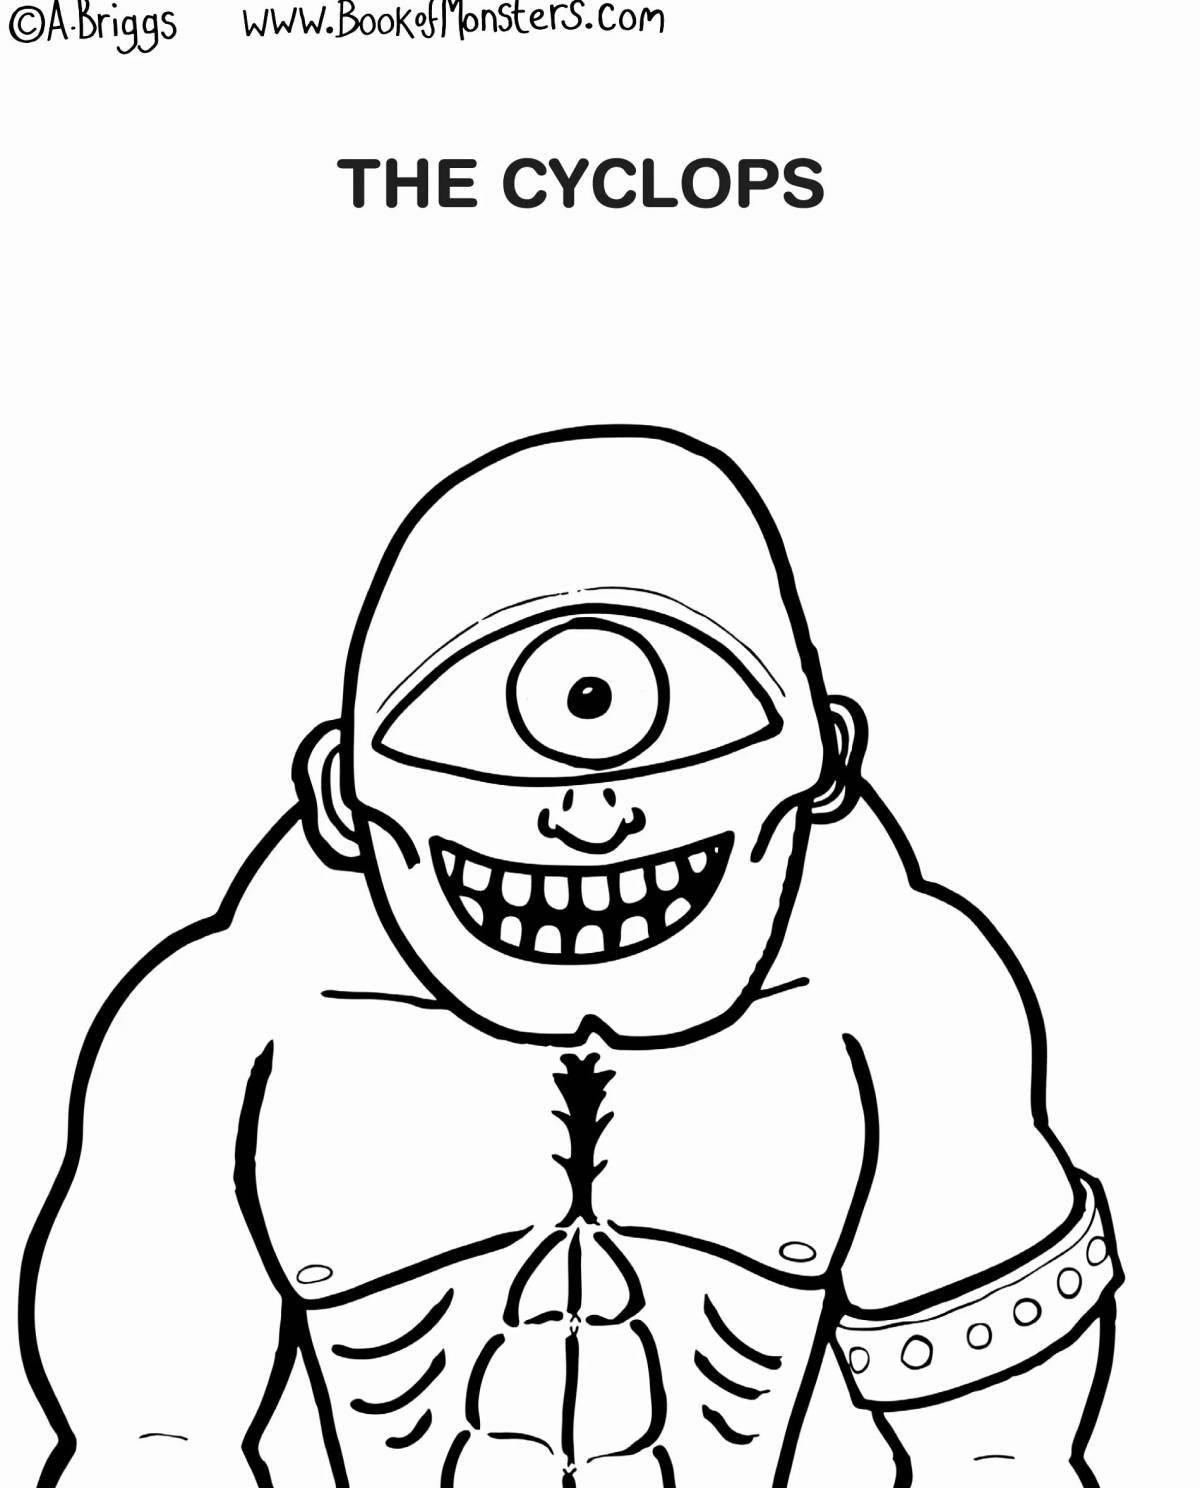 Cyclops coloring page